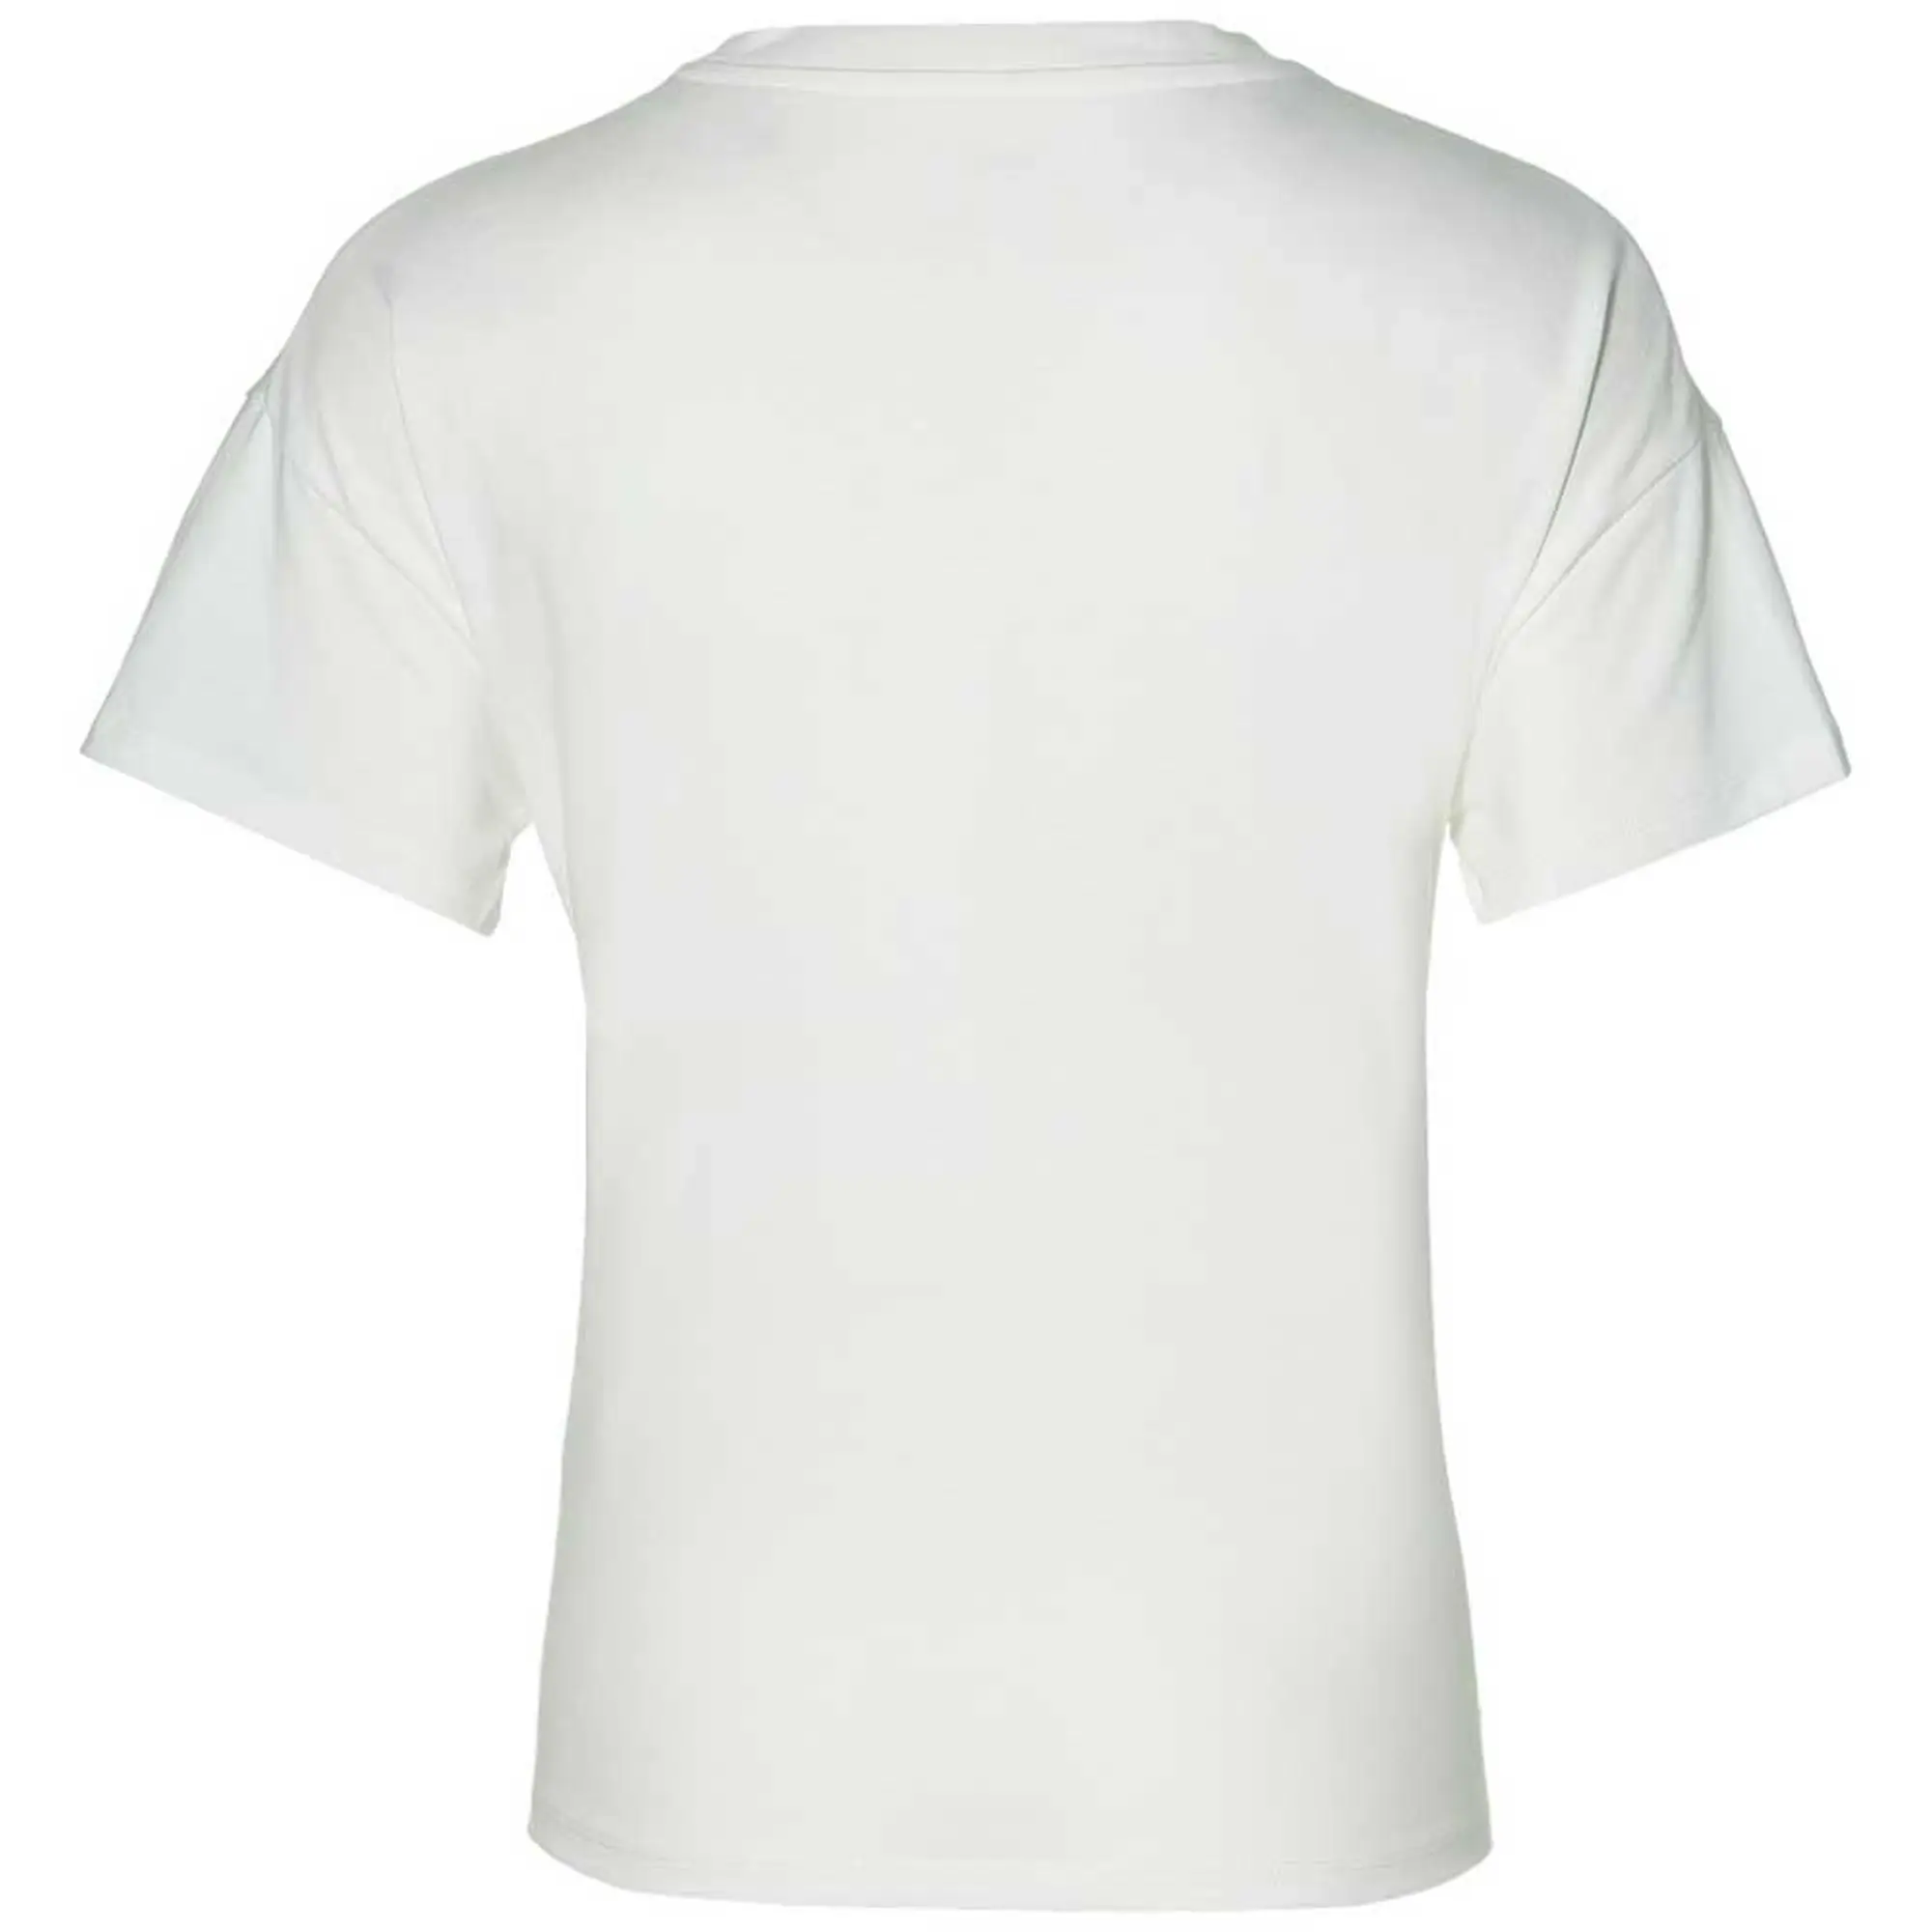 Asics Big Logo Short Sleeve T-shirt  - White